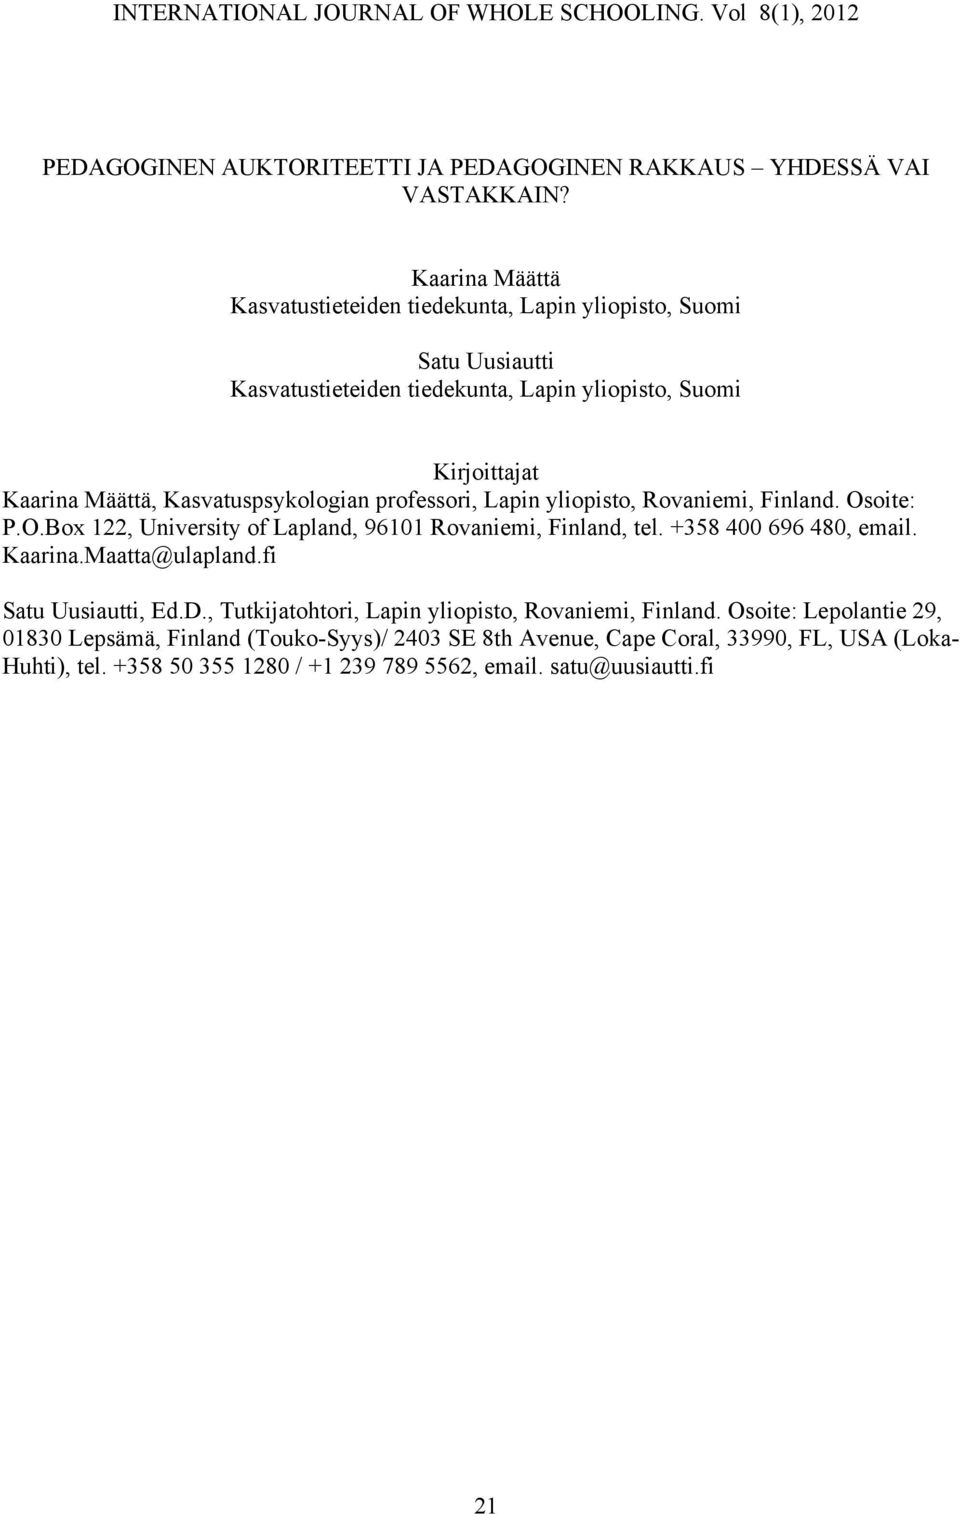 Kasvatuspsykologian professori, Lapin yliopisto, Rovaniemi, Finland. Osoite: P.O.Box 122, University of Lapland, 96101 Rovaniemi, Finland, tel. +358 400 696 480, email.